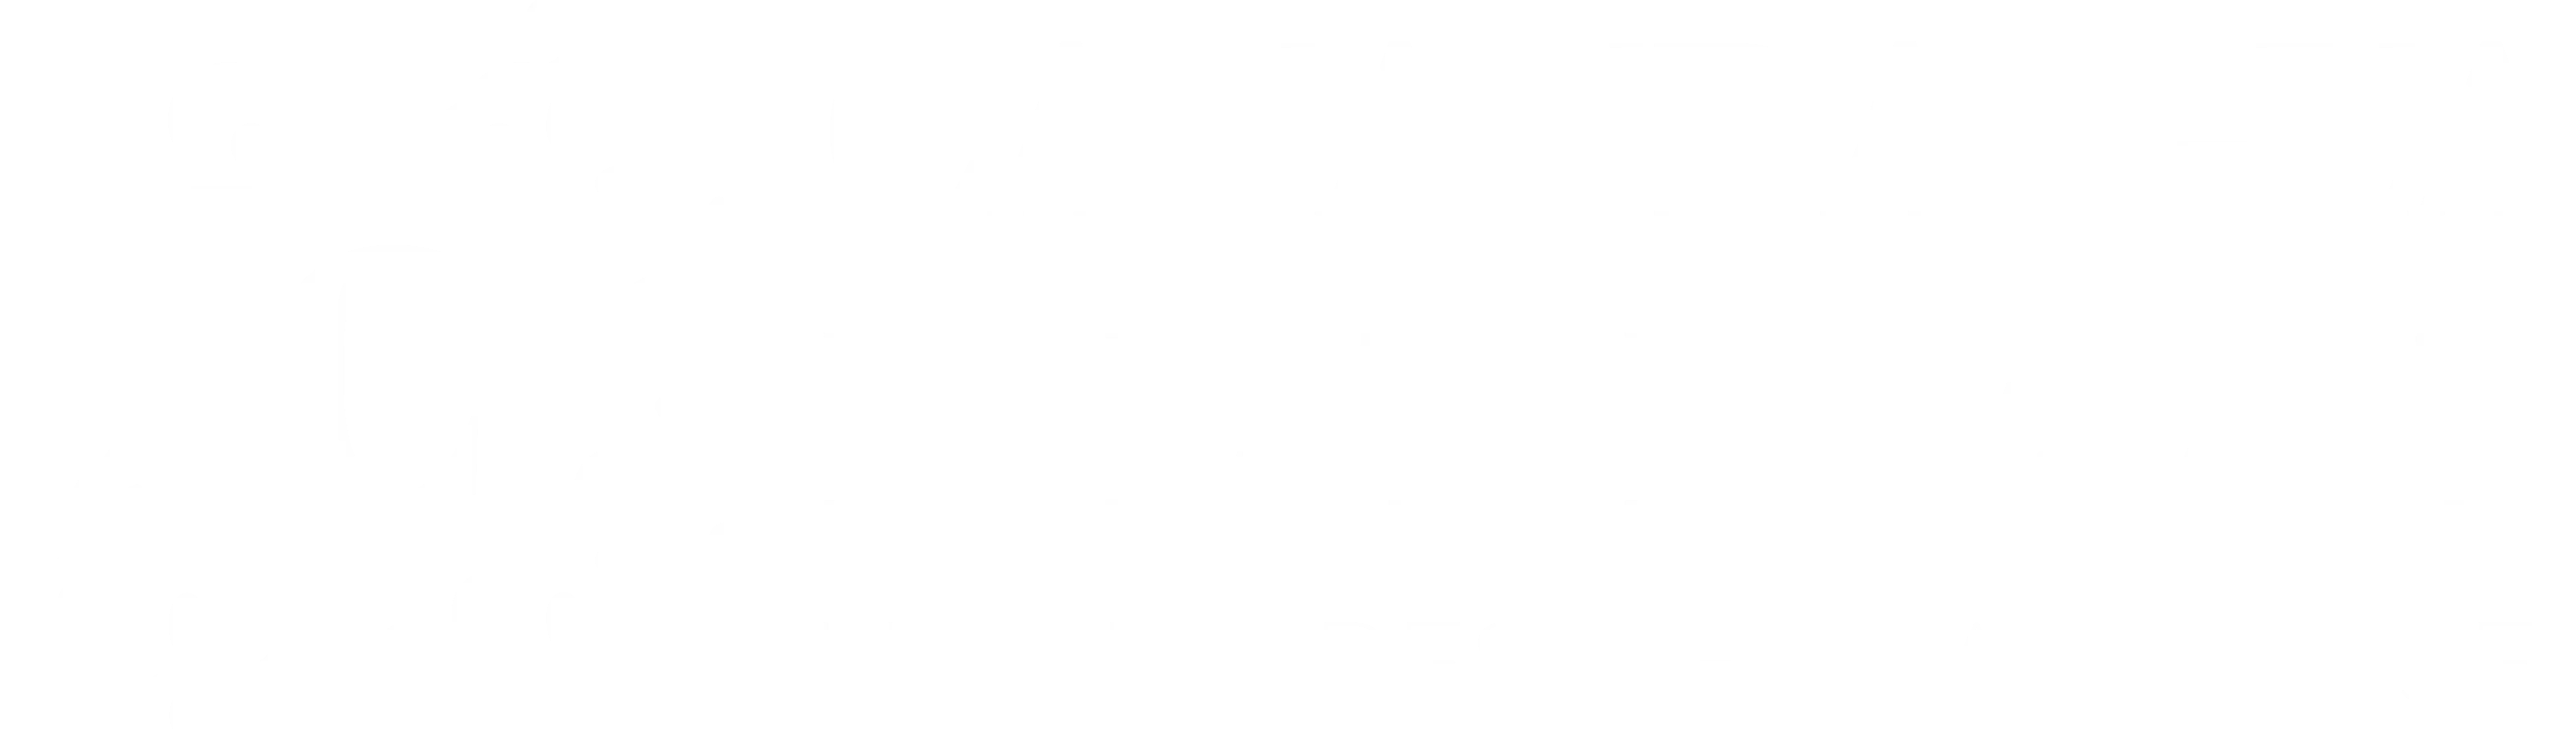 Canandaigua Retreat logo